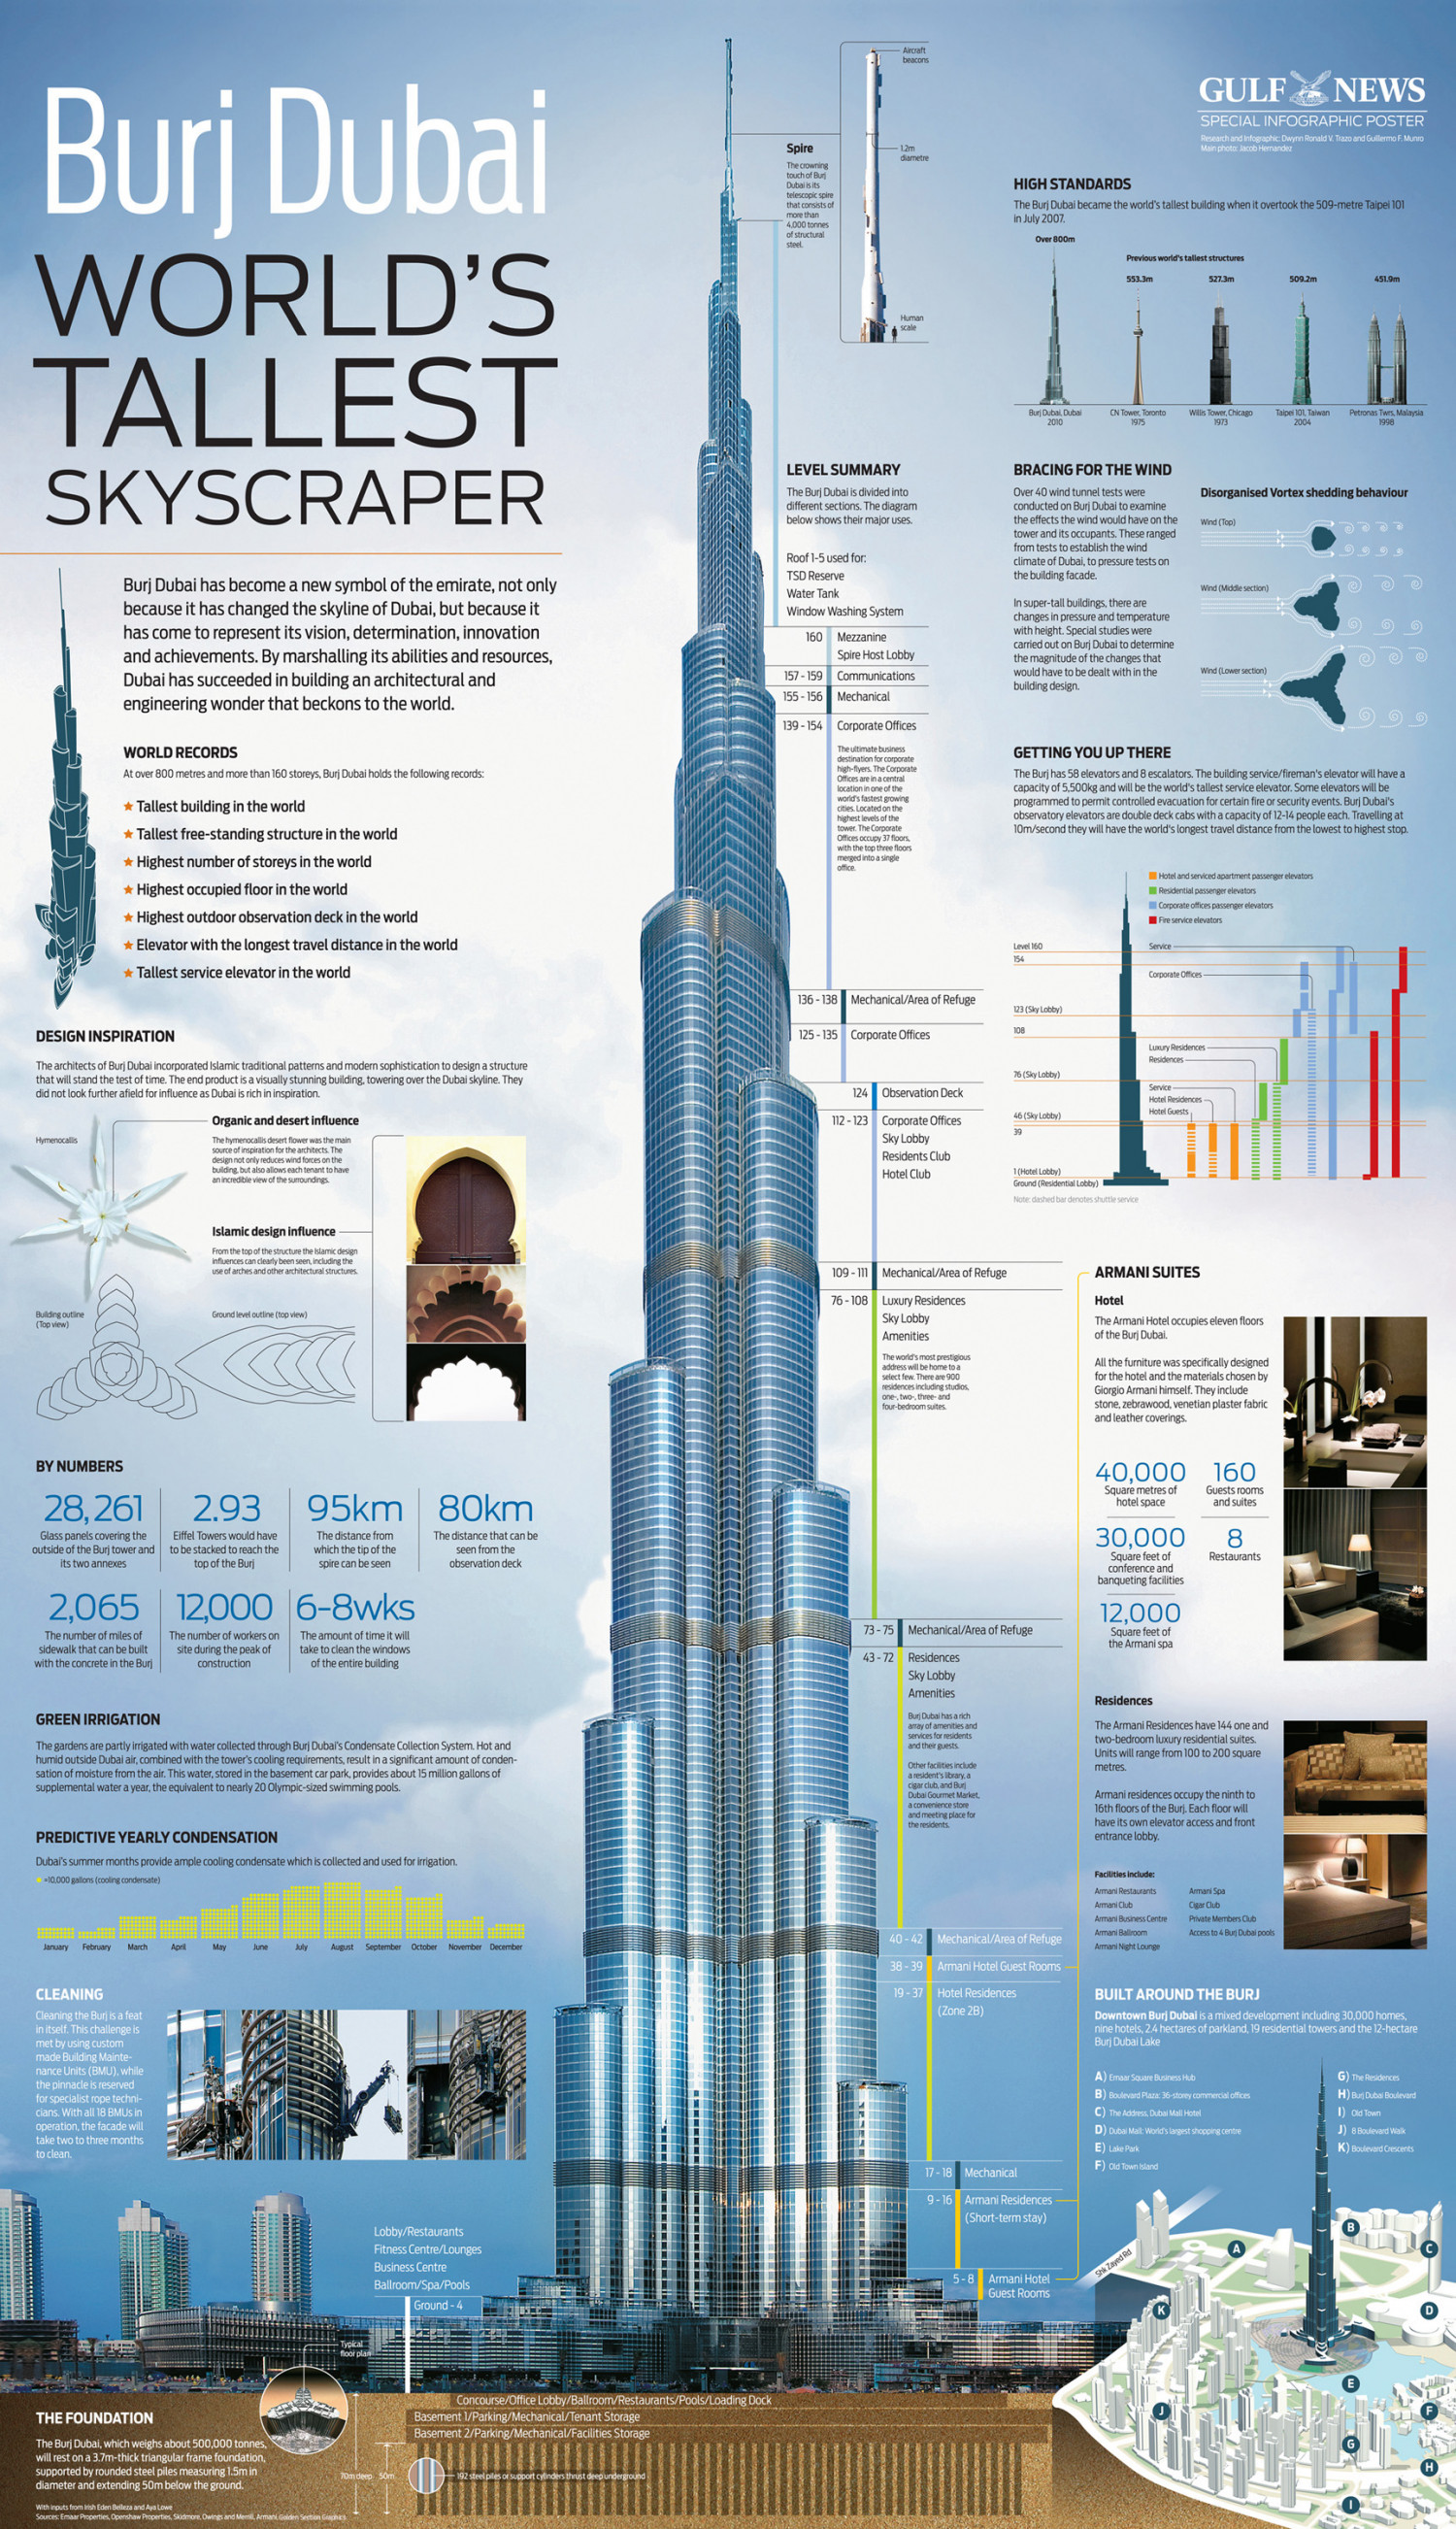 burj khalifa the worlds tallest tower from instadubaivisa